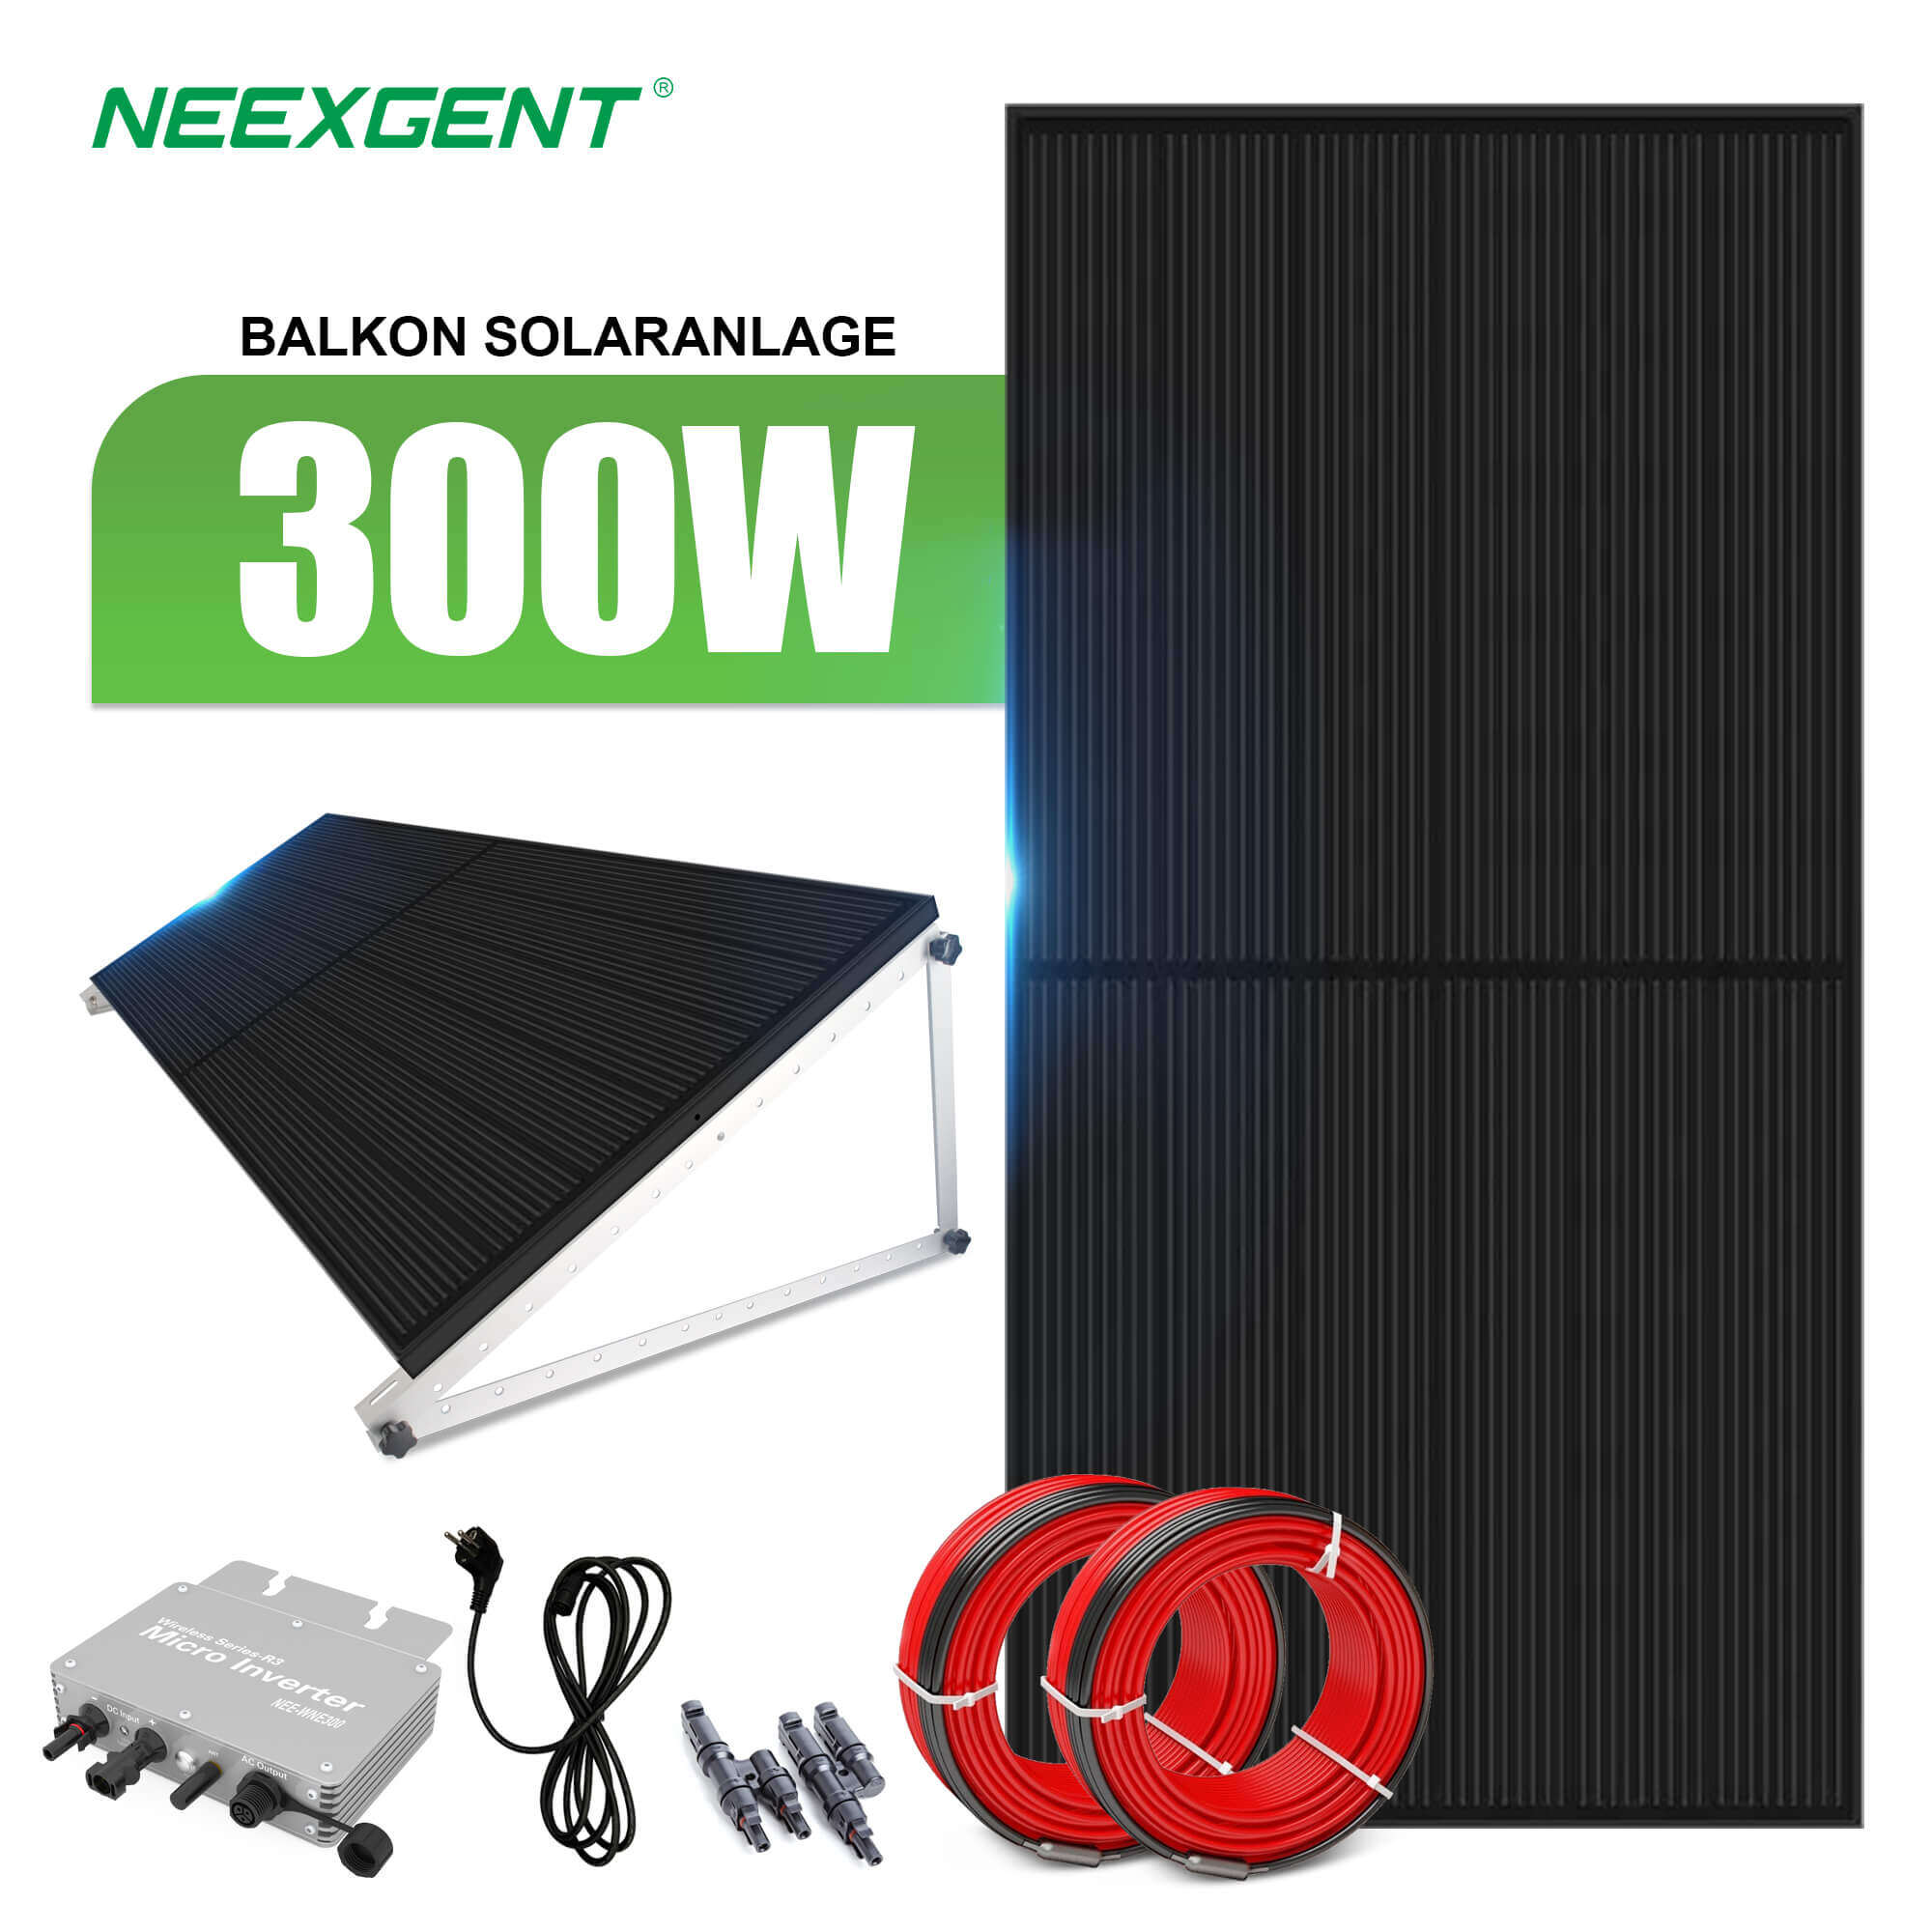 Neexgent 300w Micro Inverter On Grid Solar Panel System Kit für Balkon Hof Garten